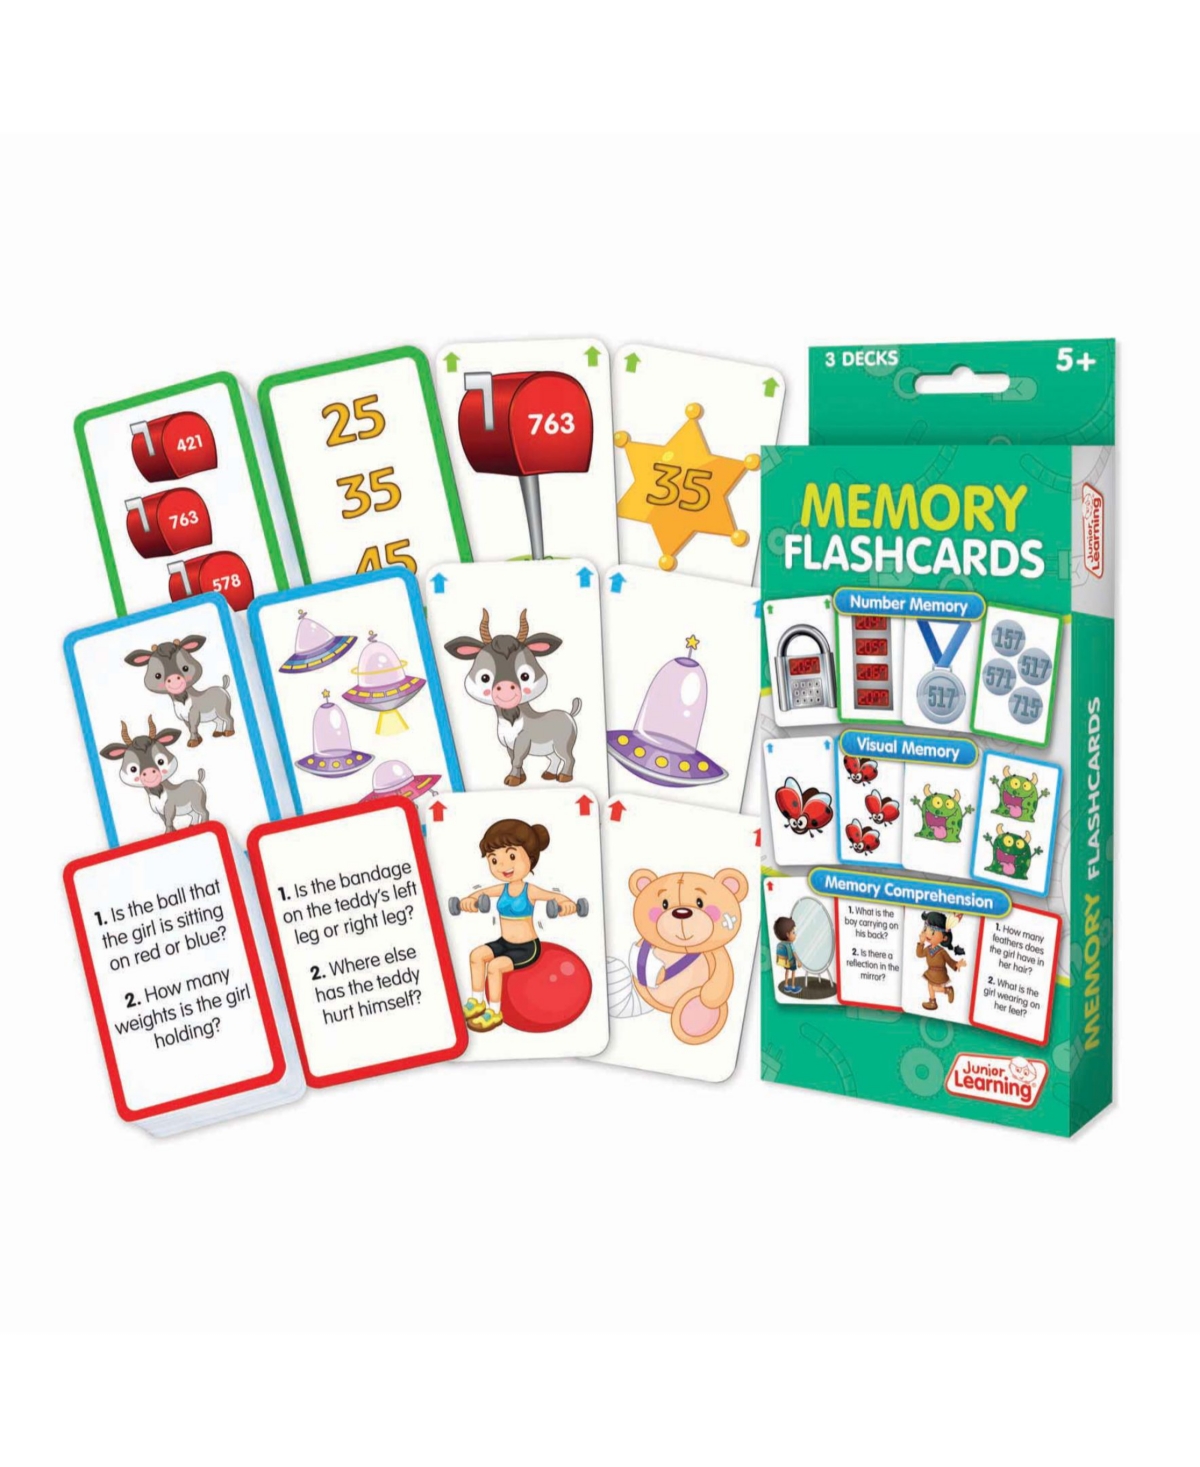 Redbox Junior Learning Memory Flashcards Educational Set (number Memory, Visual Memory, Memory Comprehensio In Open Misce